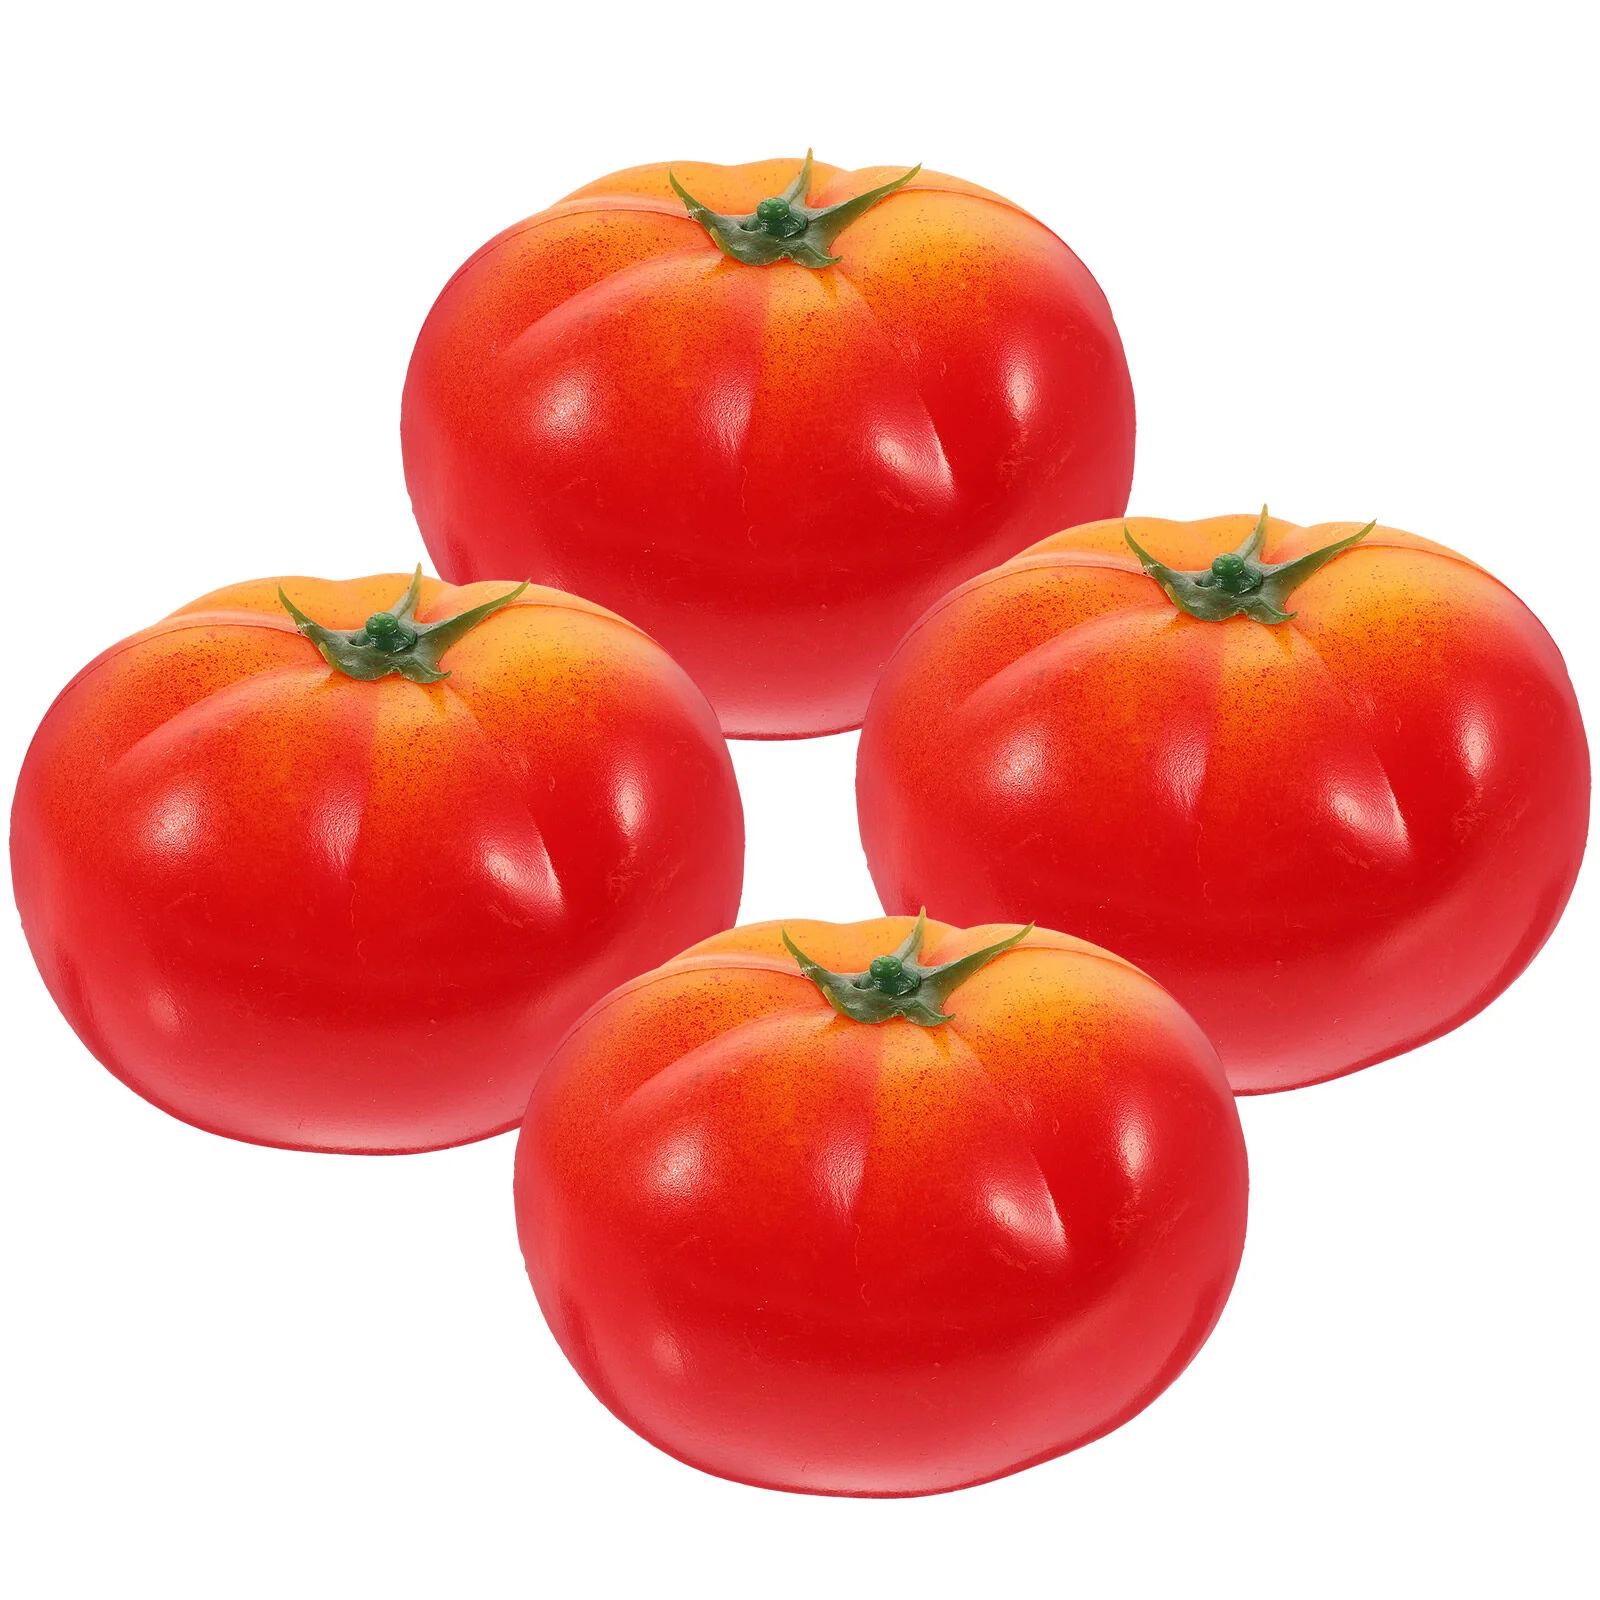 

Fruit Artificial Lifelike Vegetable Simulated Models Showcase Display Props Fake Tomato Simulation Foam Vegetables